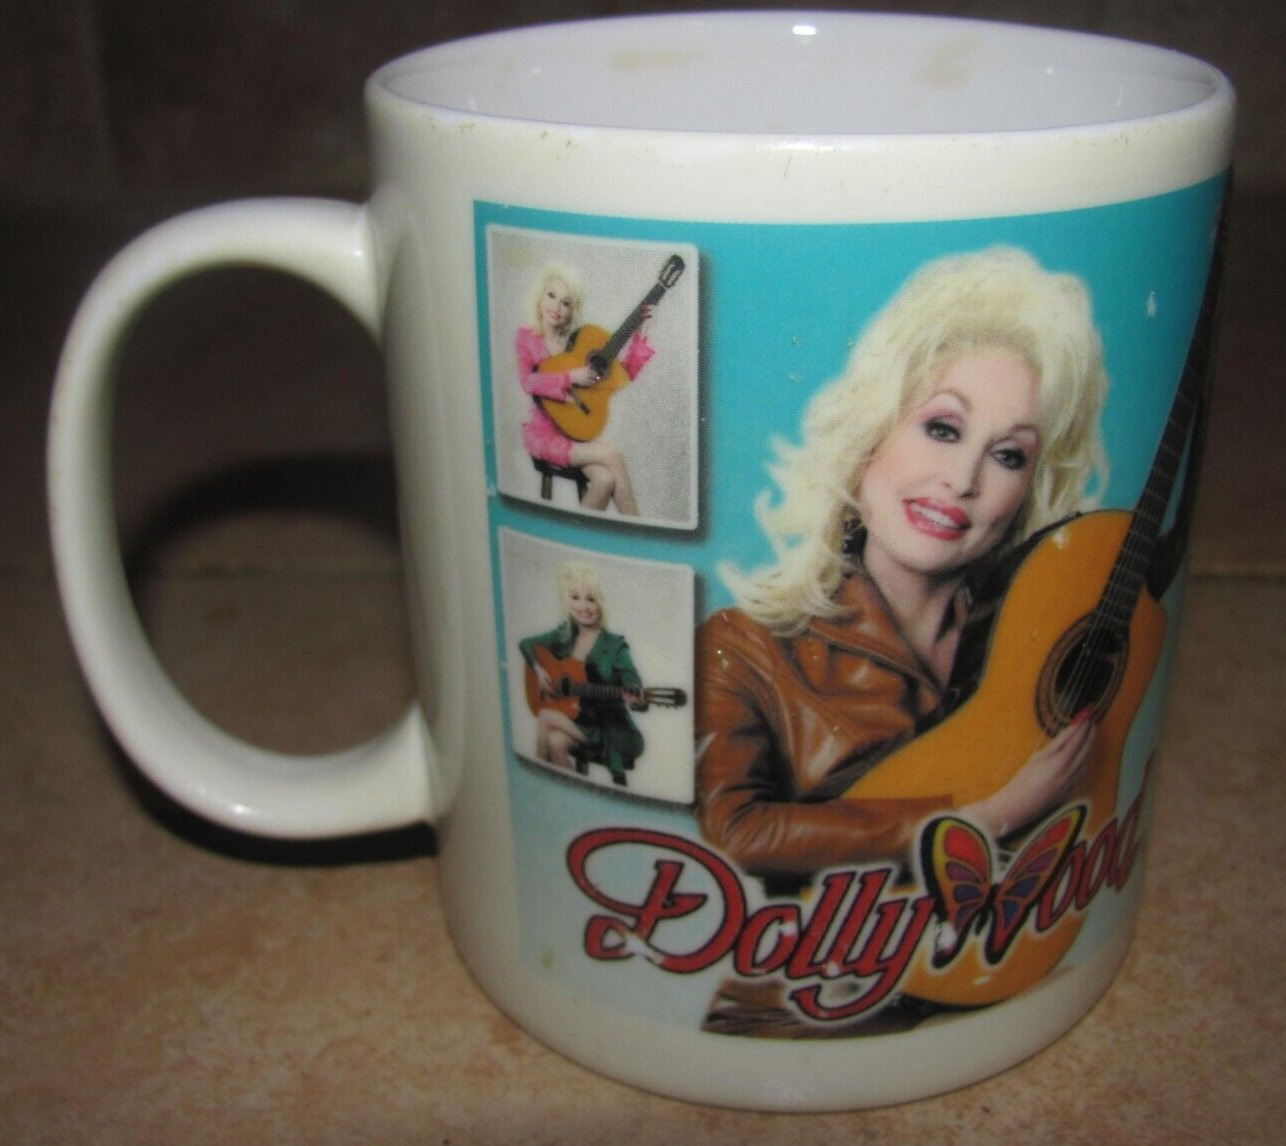 Dollywood Souvenir Coffee Mug. Wrap Around Image Dolly & Guitar. Good Condition